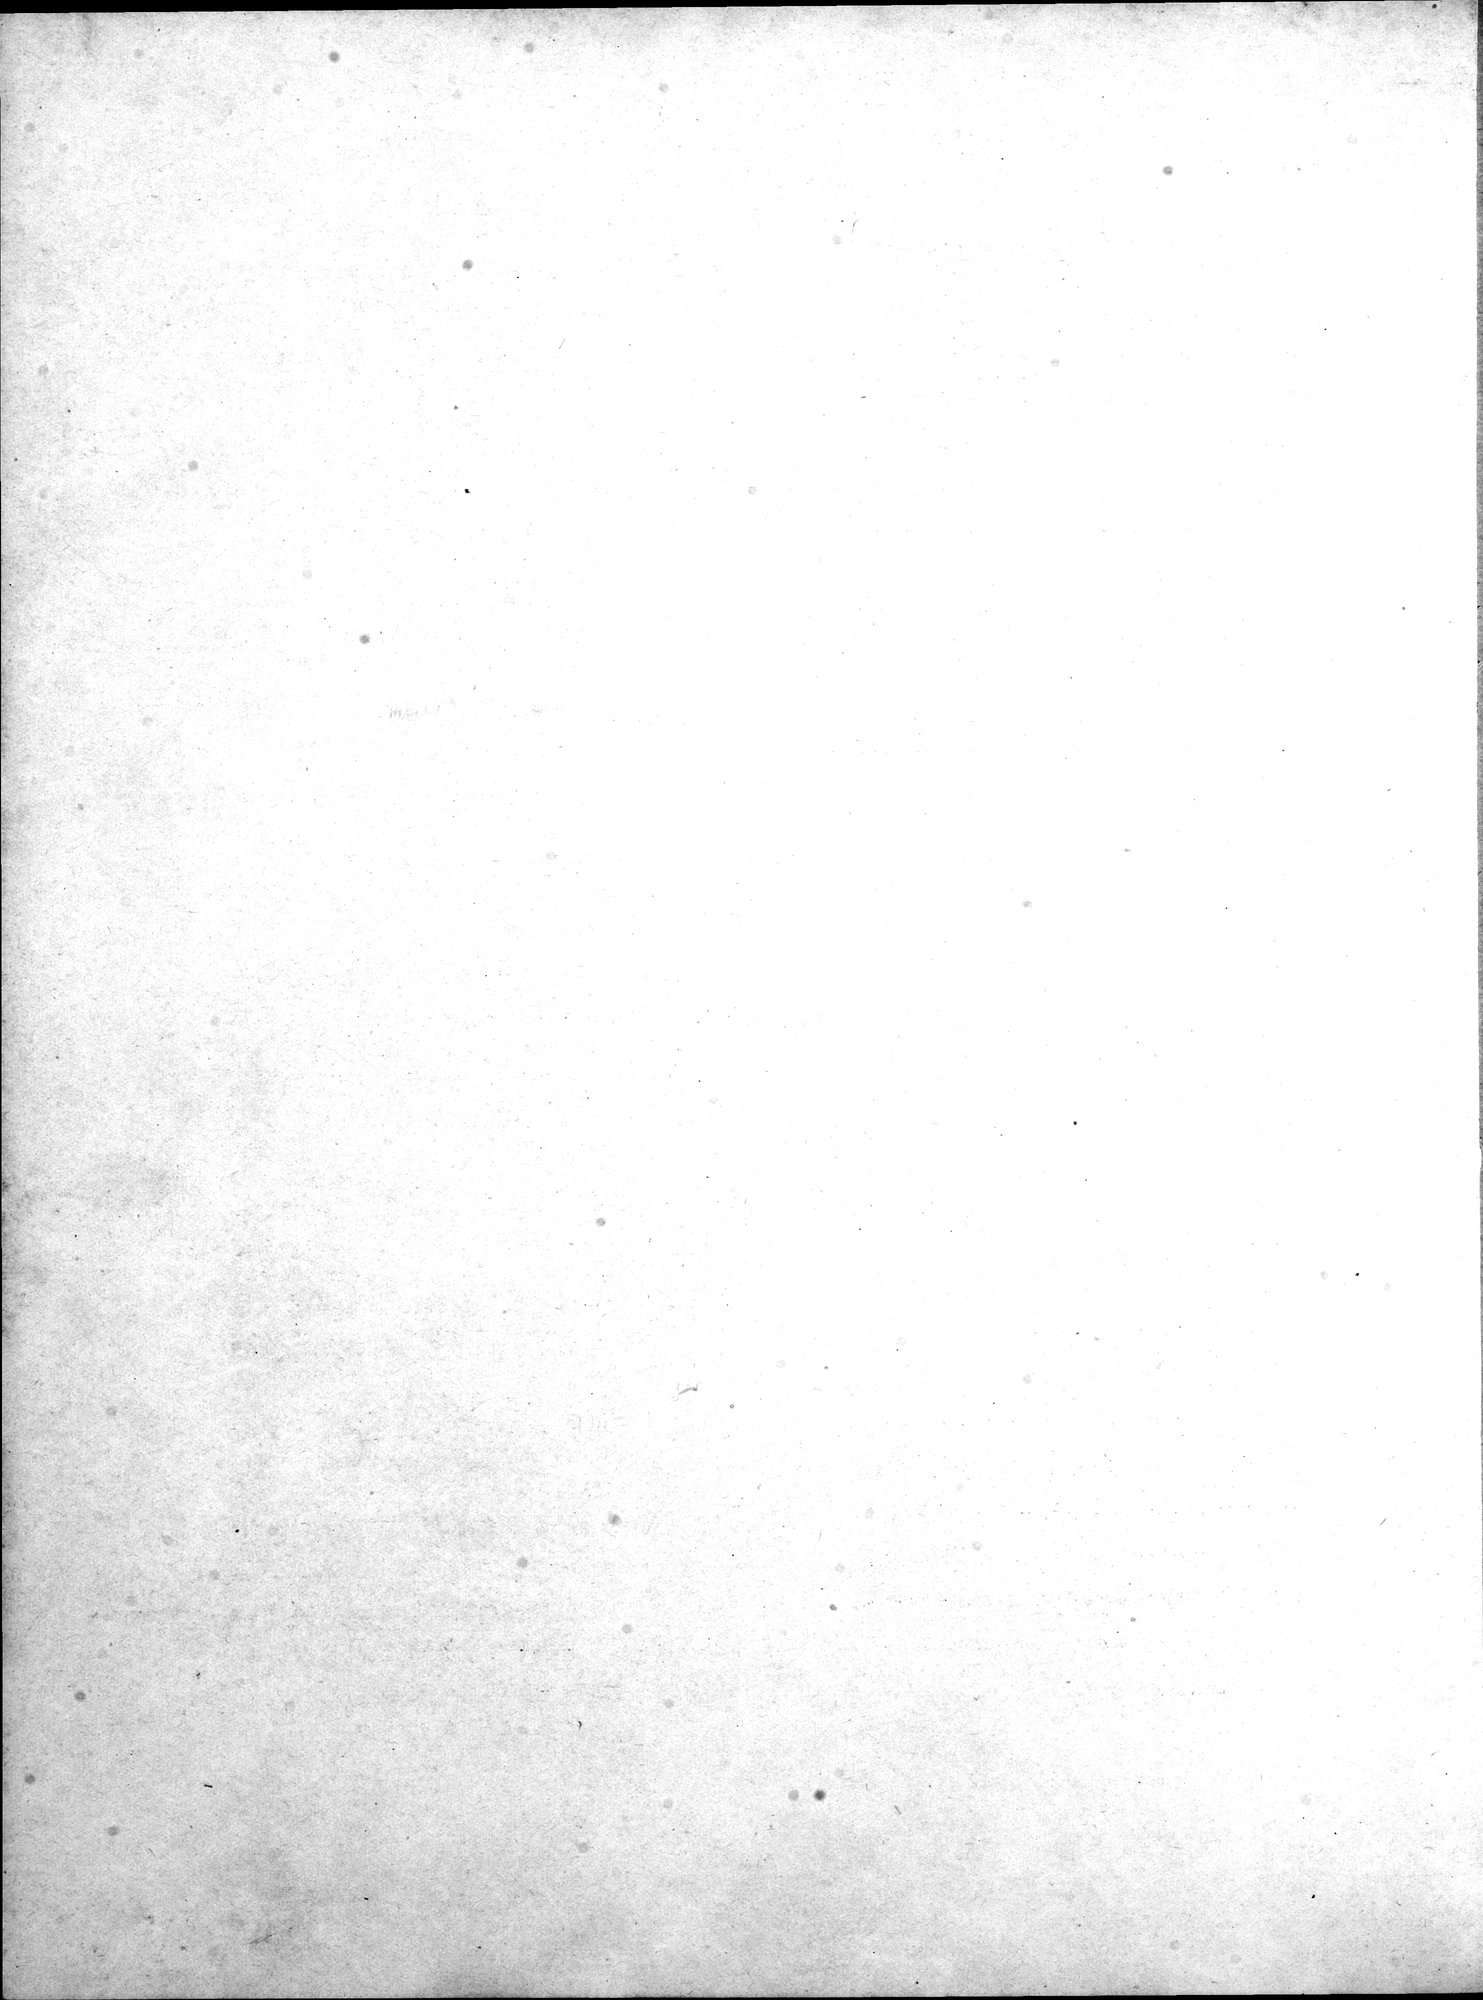 Mémoires Concernant l'Asie Orientale : vol.3 / Page 262 (Grayscale High Resolution Image)